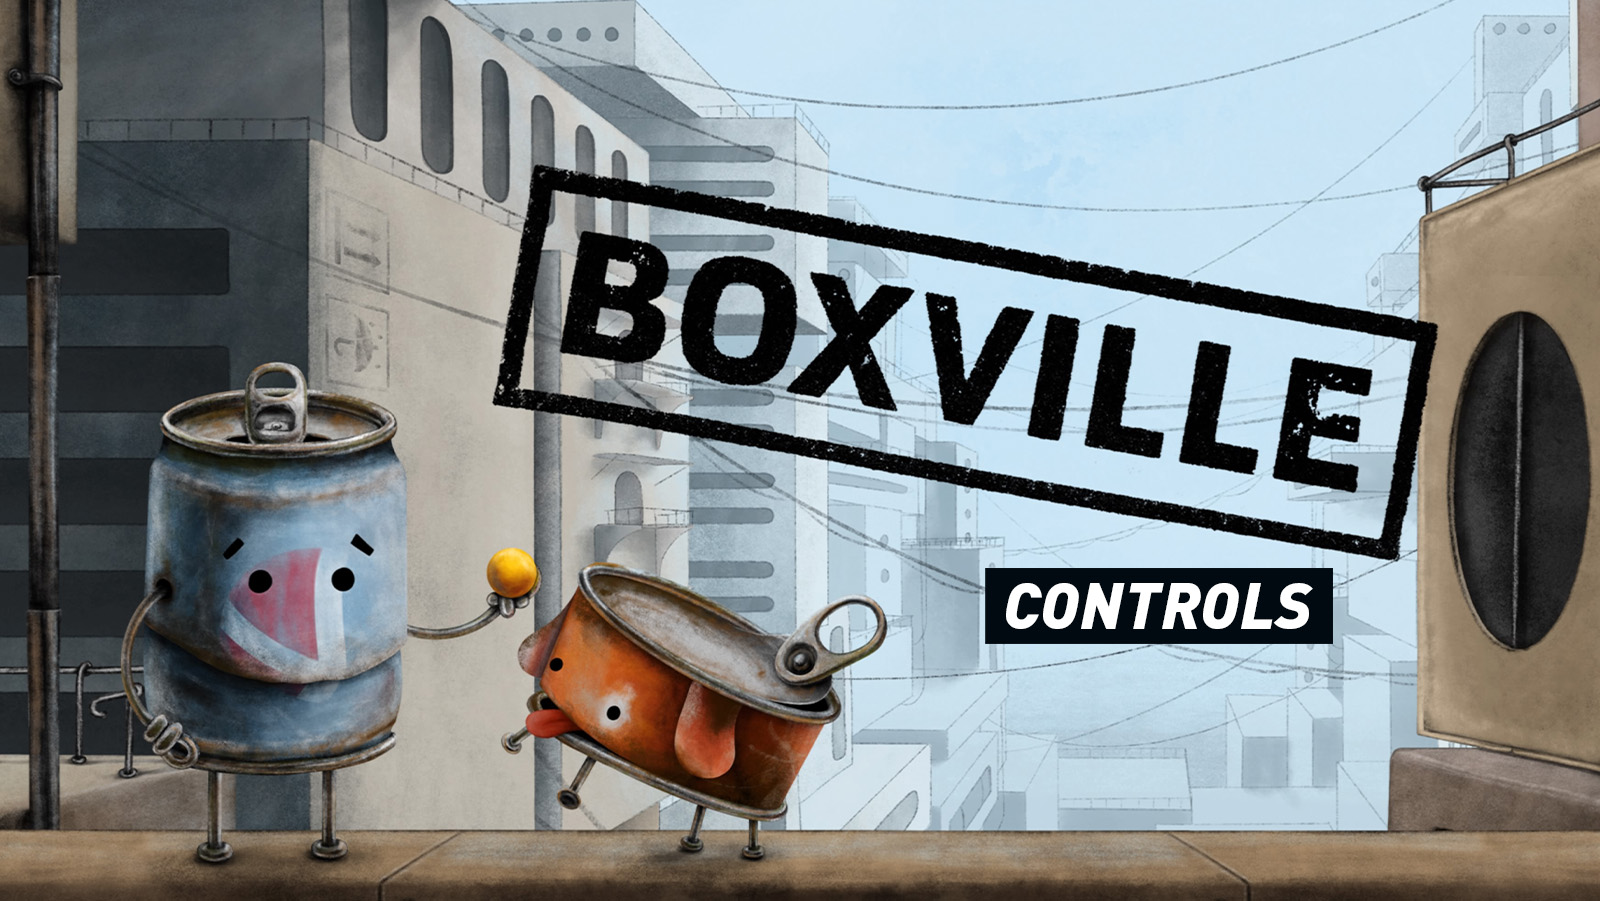 Boxville Controls